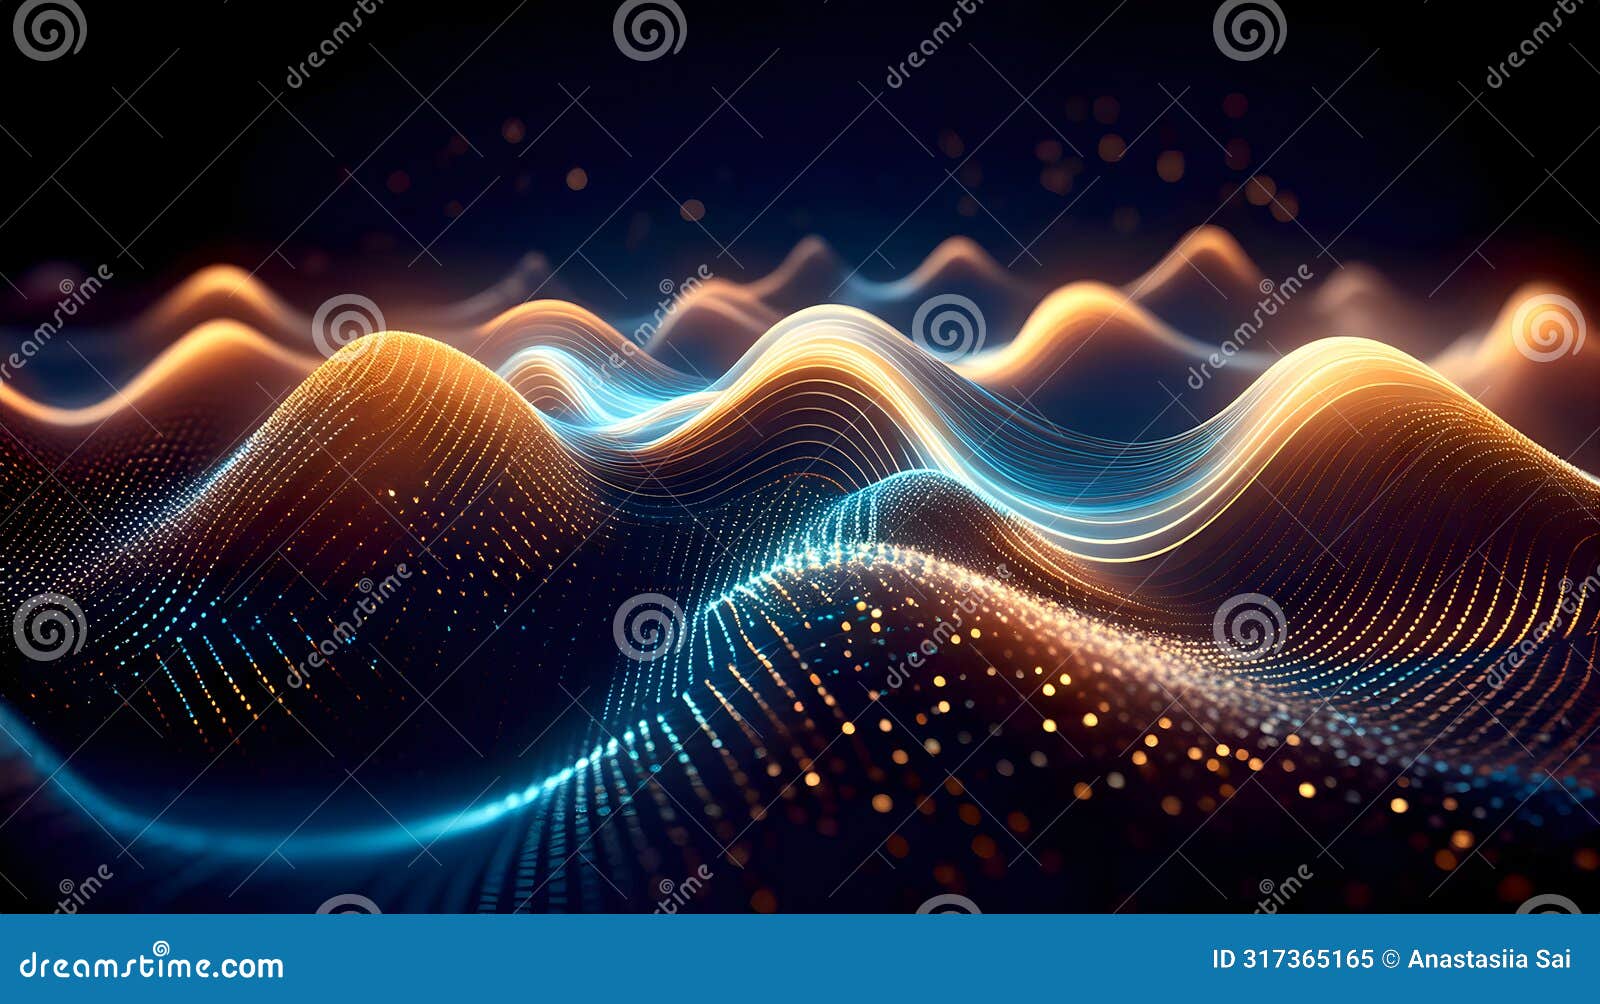 neuro waves, 3d background